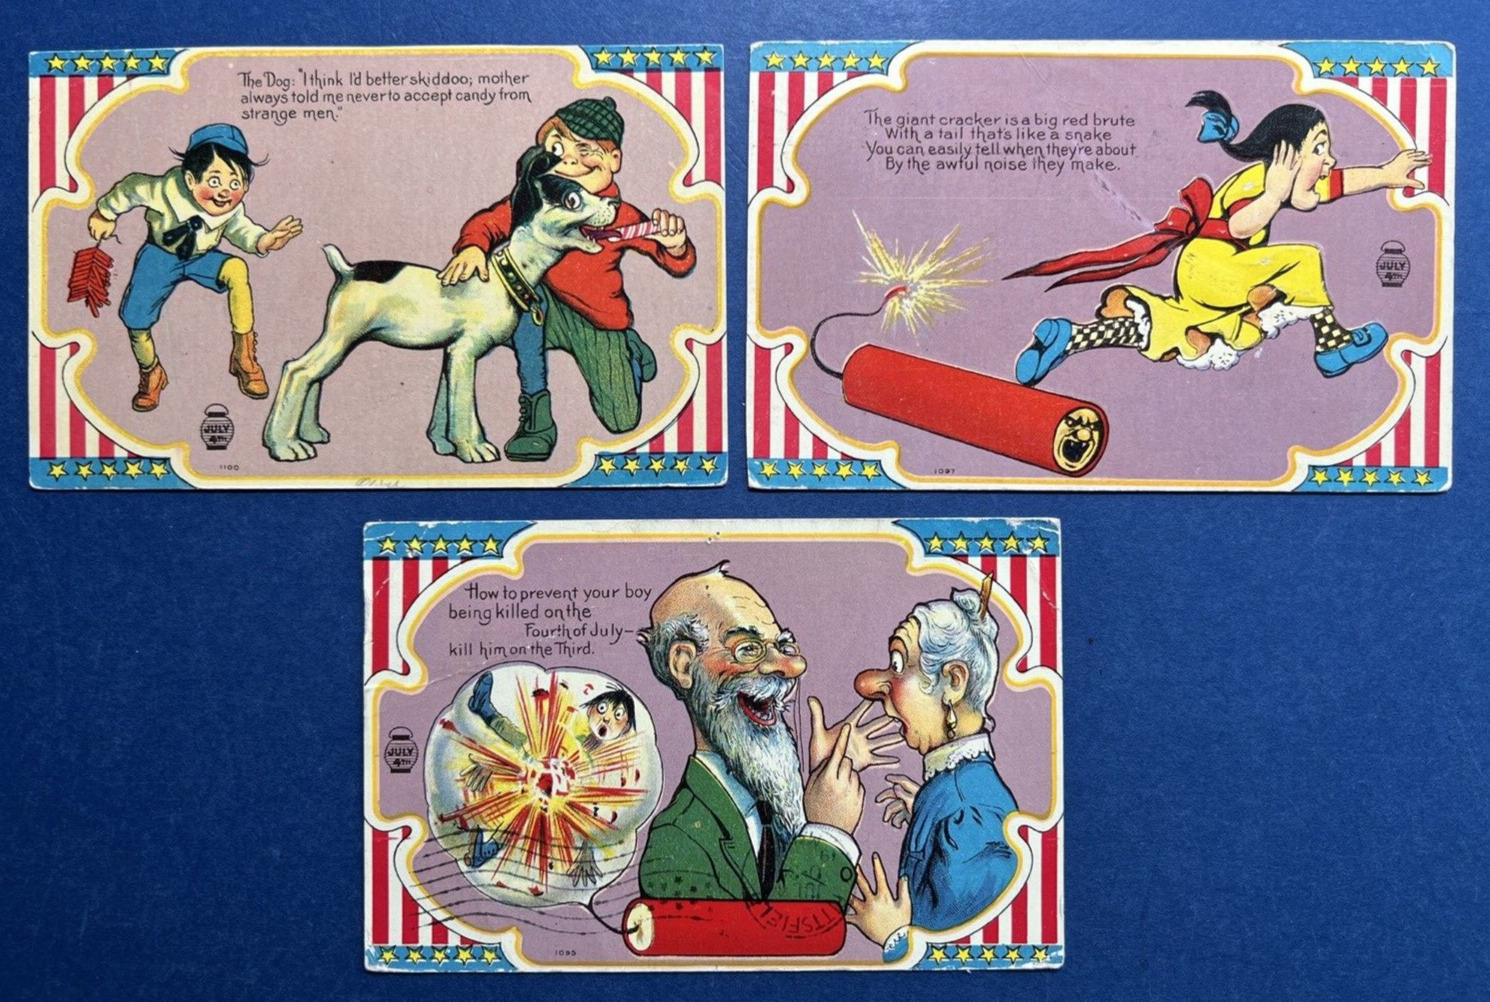 SET 3 Fourth of July Antique Patriotic Postcards. Series #1. 1908.Humor/Comic